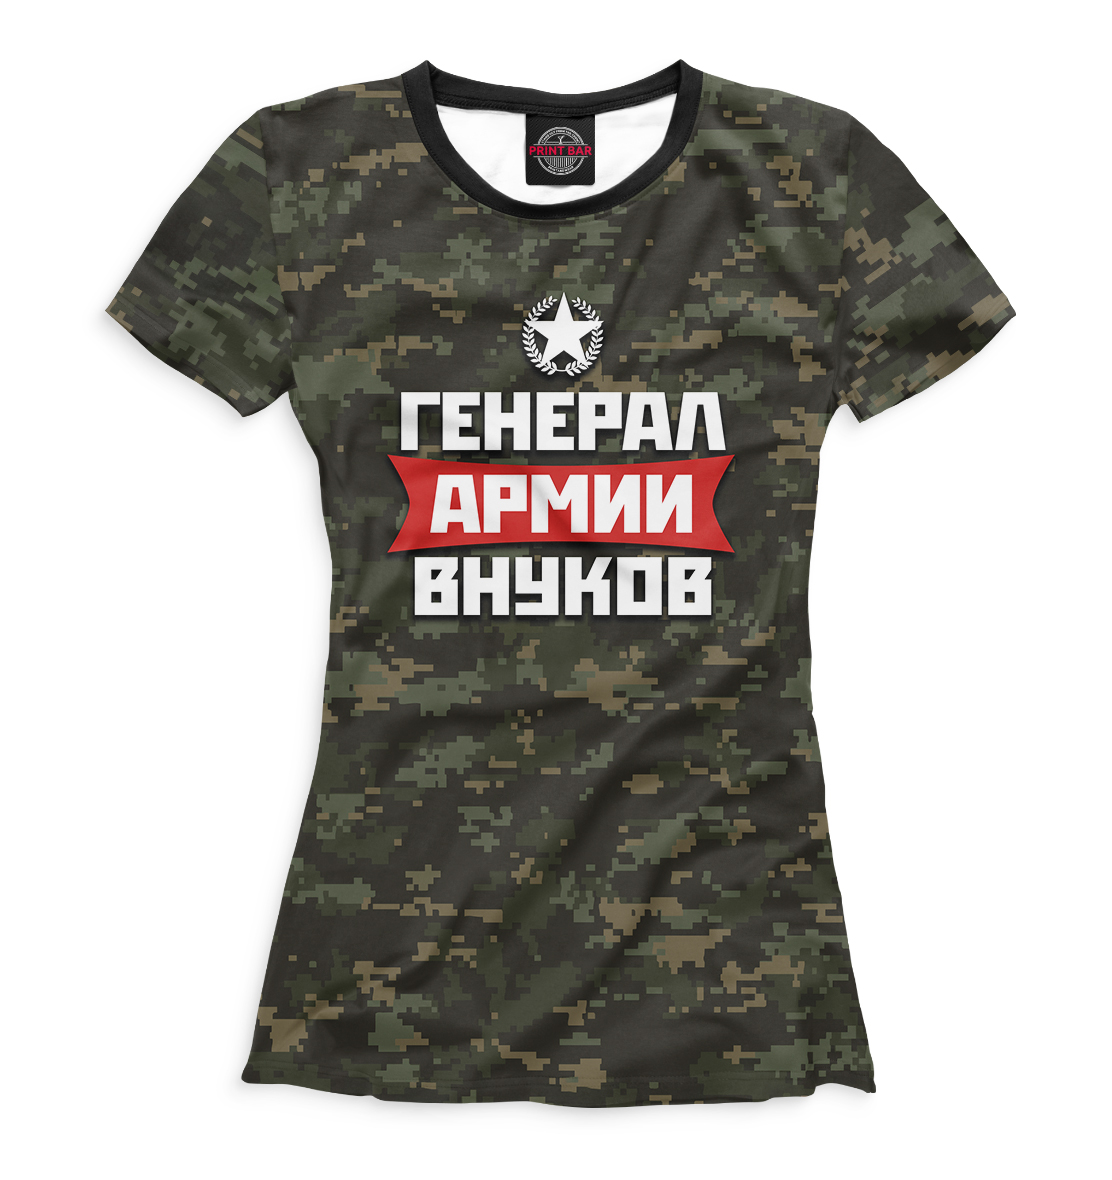 Футболка Генерал армии внуков для женщин, артикул: 23F-453764-fut-1mp